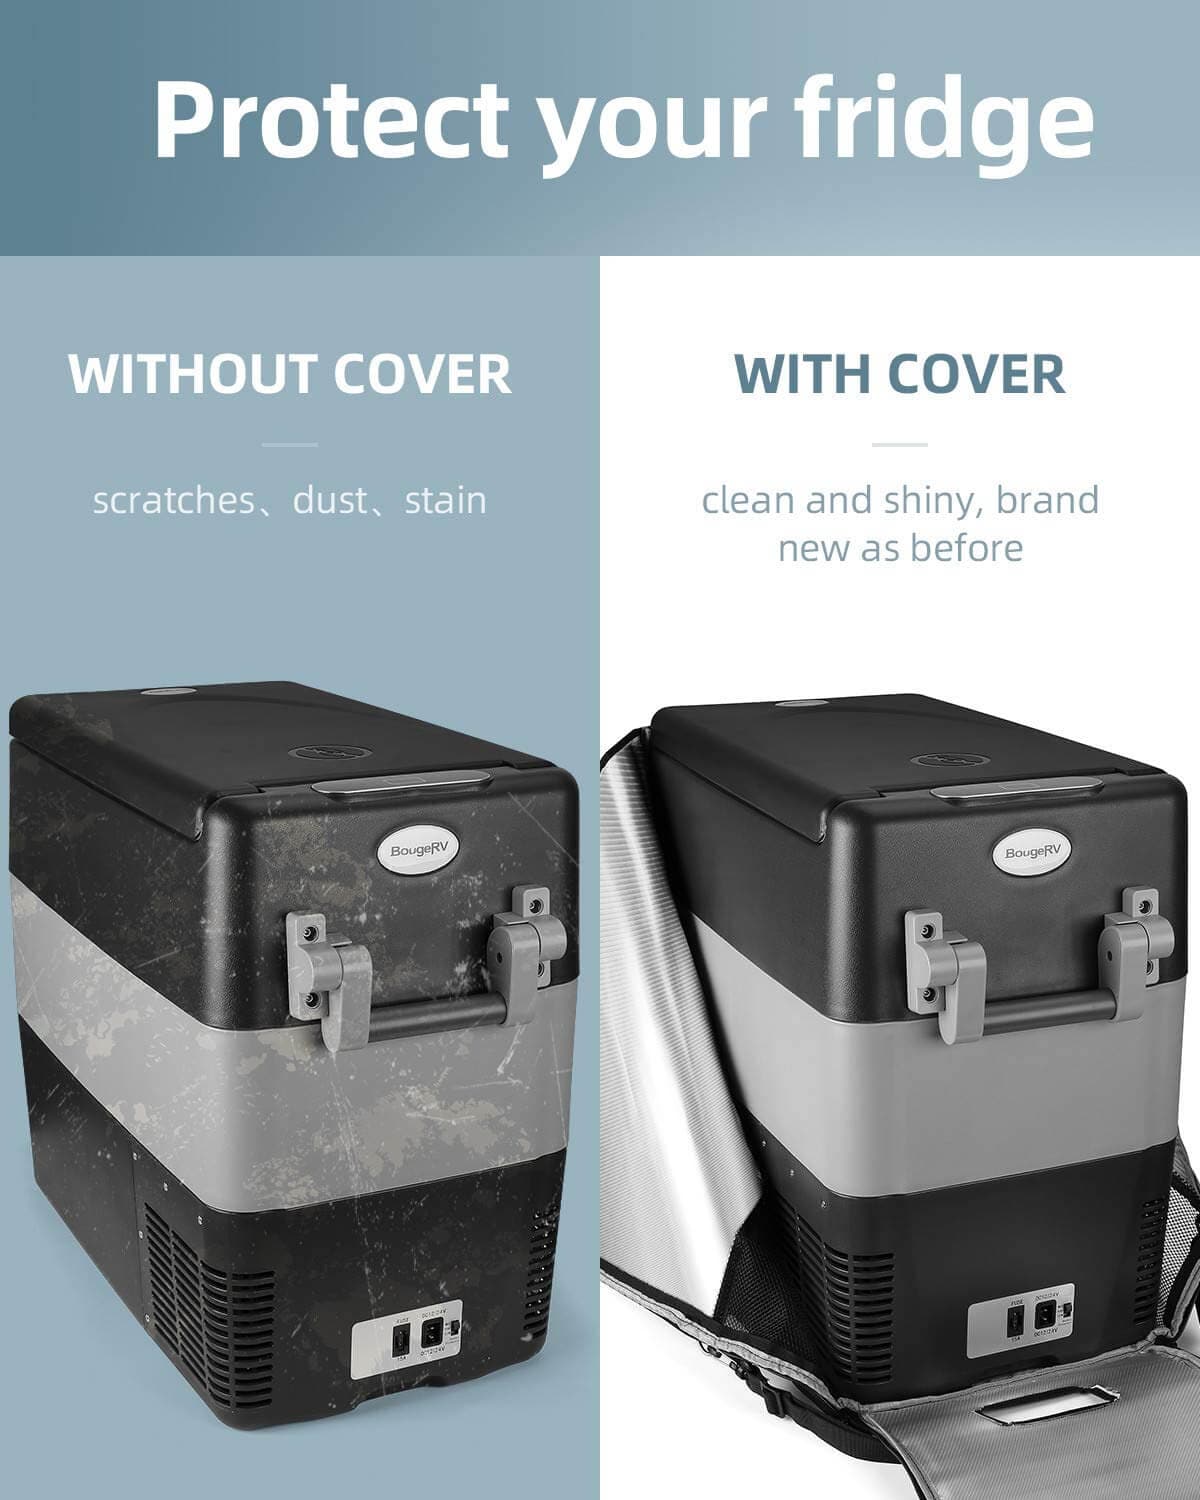 BougeRV 12V 53 Quart (50L) Portable Car Fridge Cover | A3001-01805